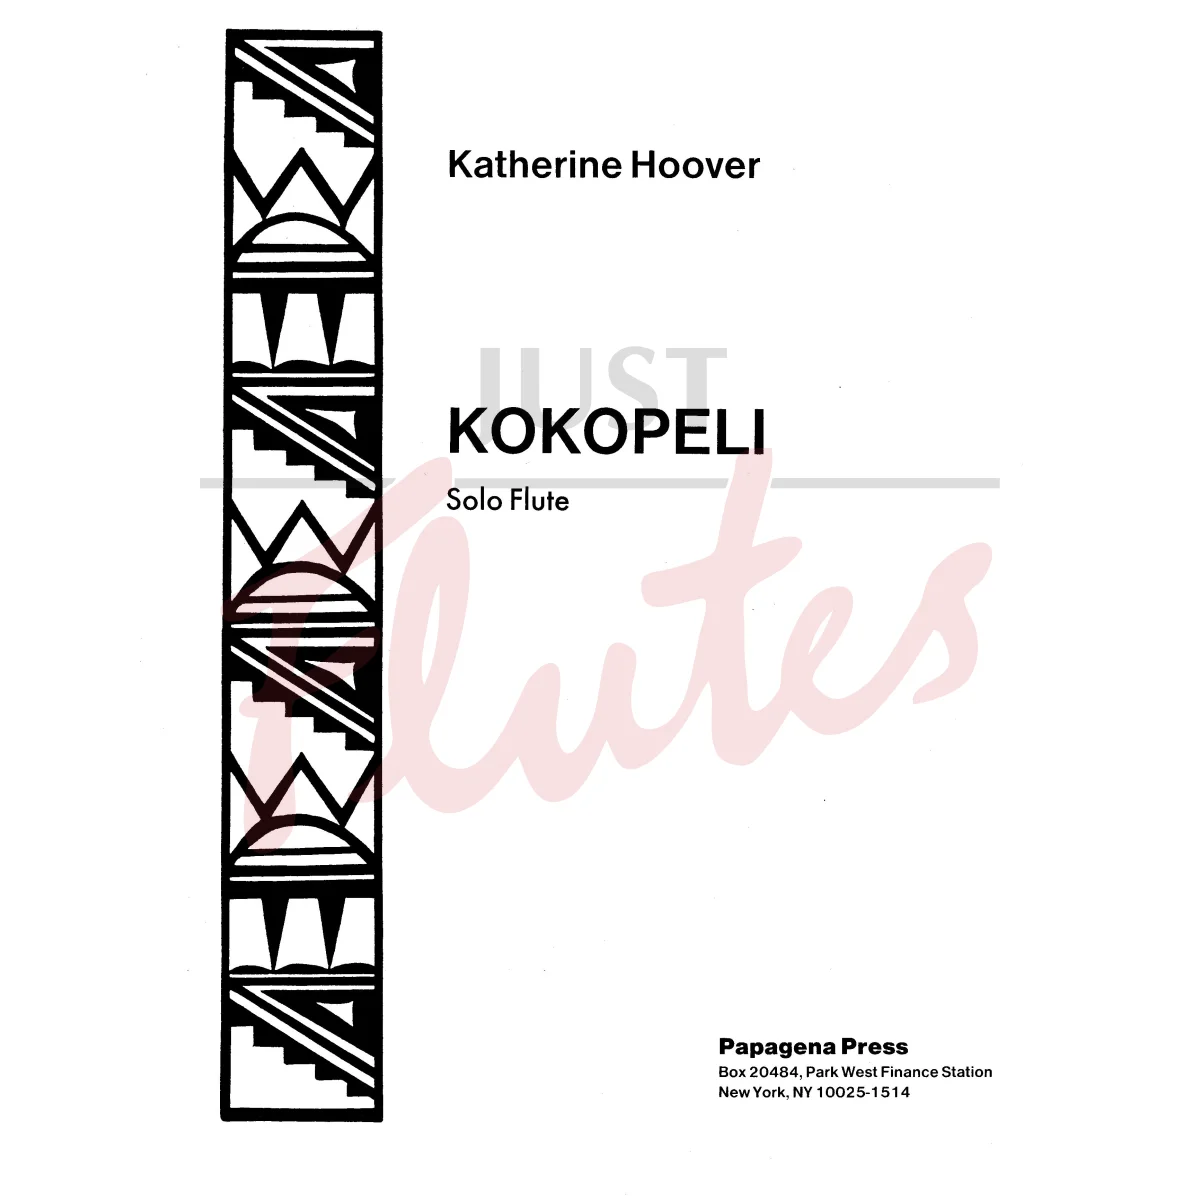 Kokopeli for Solo Flute